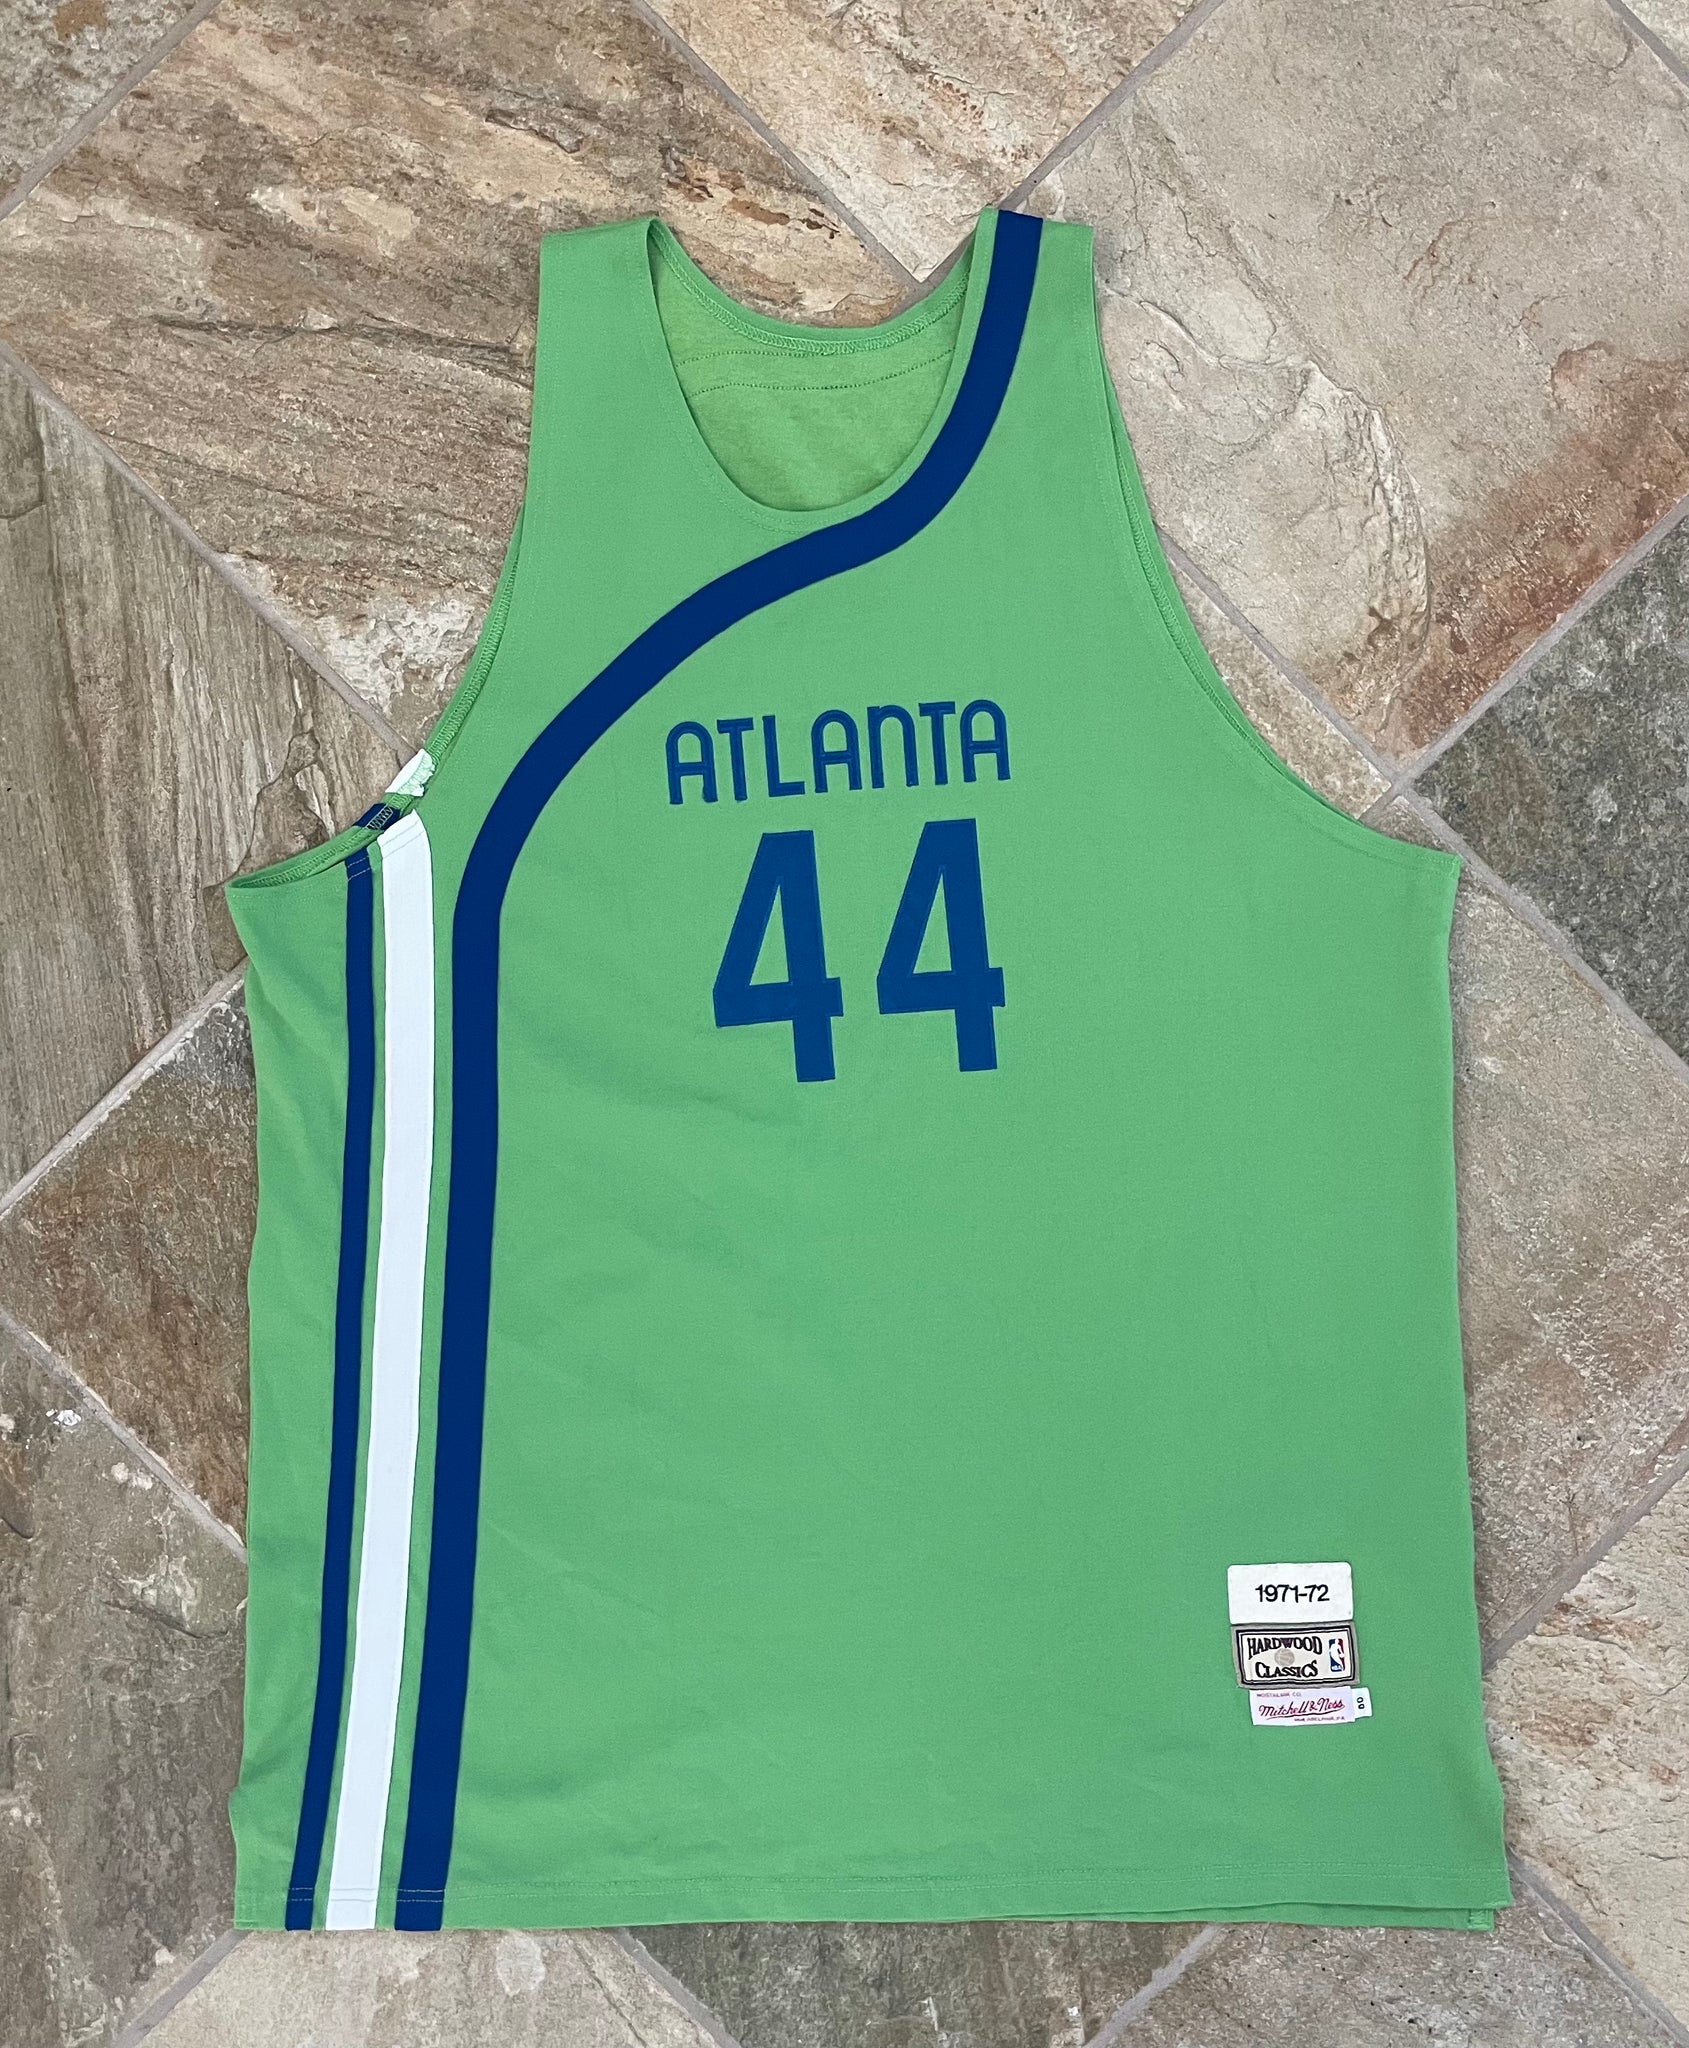 Neon Green Nba Atlanta Hawks Throwback Basketball Jersey #44 Pistol